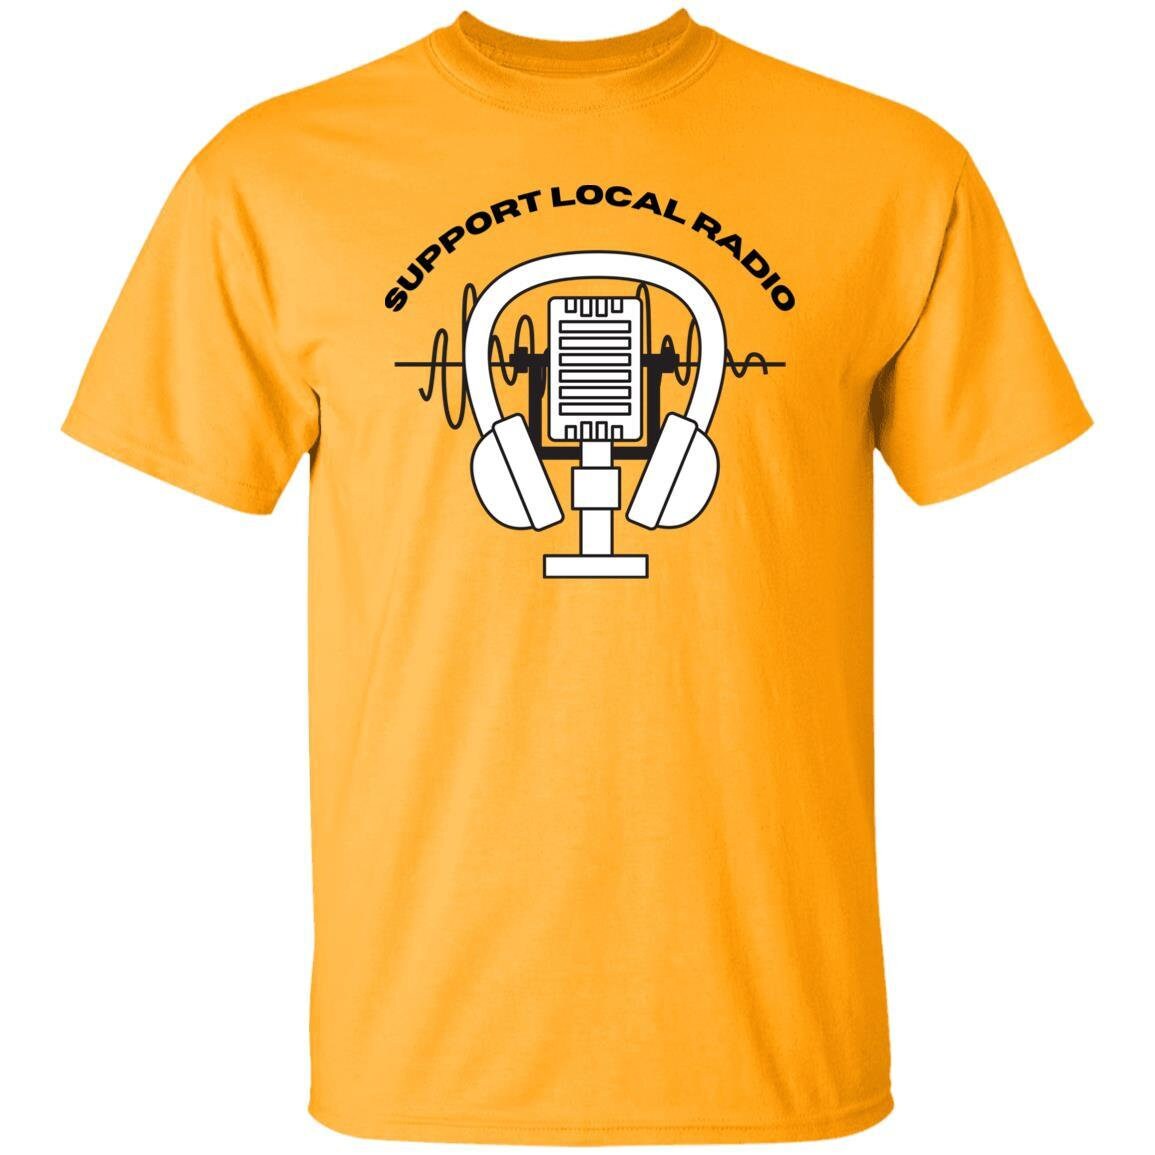 Support Local Radio T-Shirt